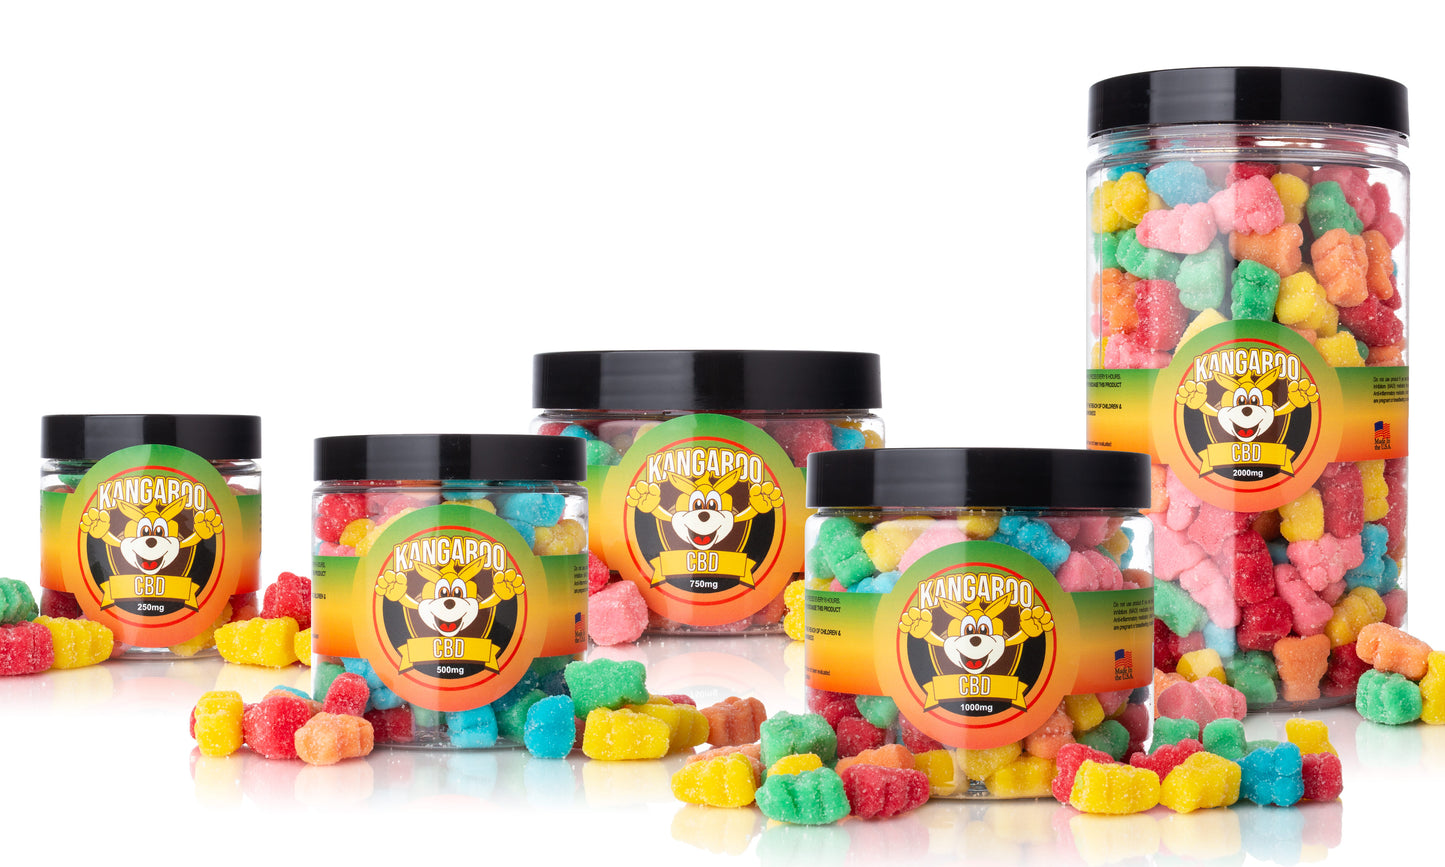 Kangaroo CBD Infused Sour Gummy Bears